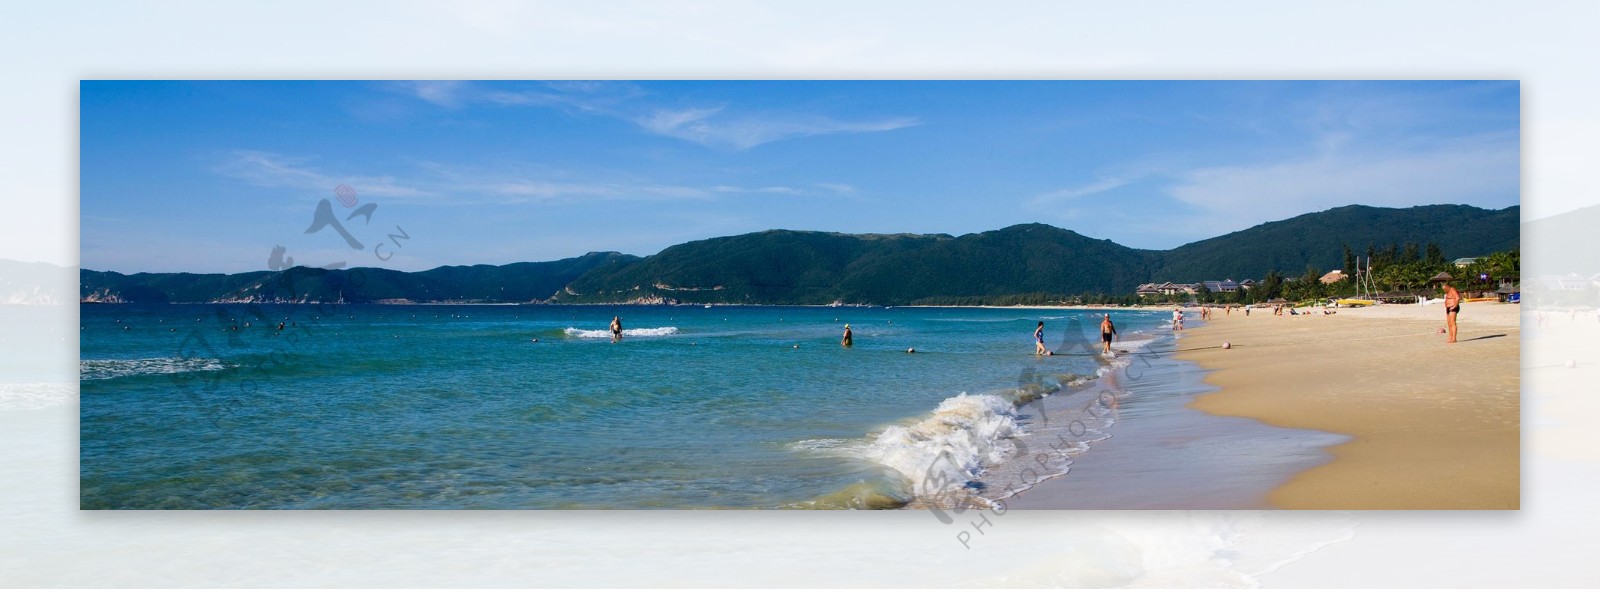 旅游度假海边banner背景图